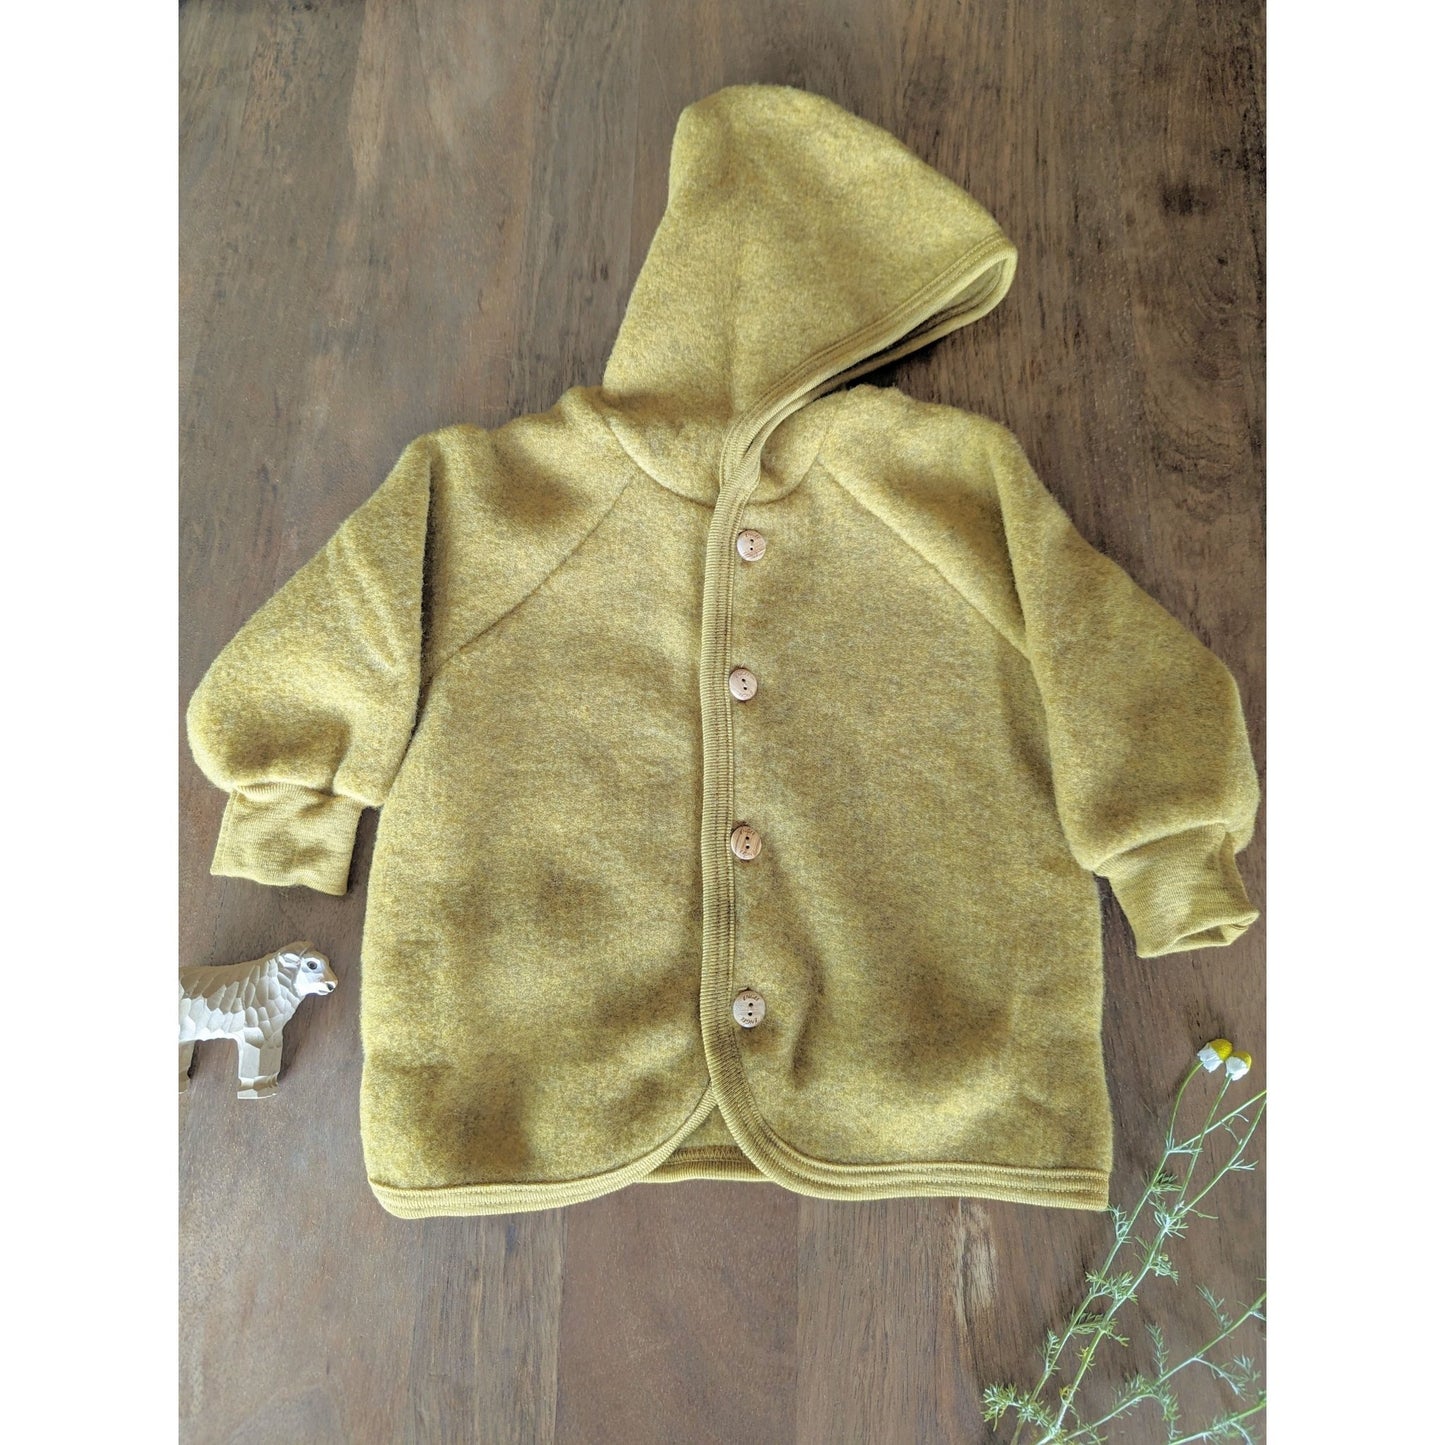 Engel - Organic Wool Fleece Jacket for Babies and Kids